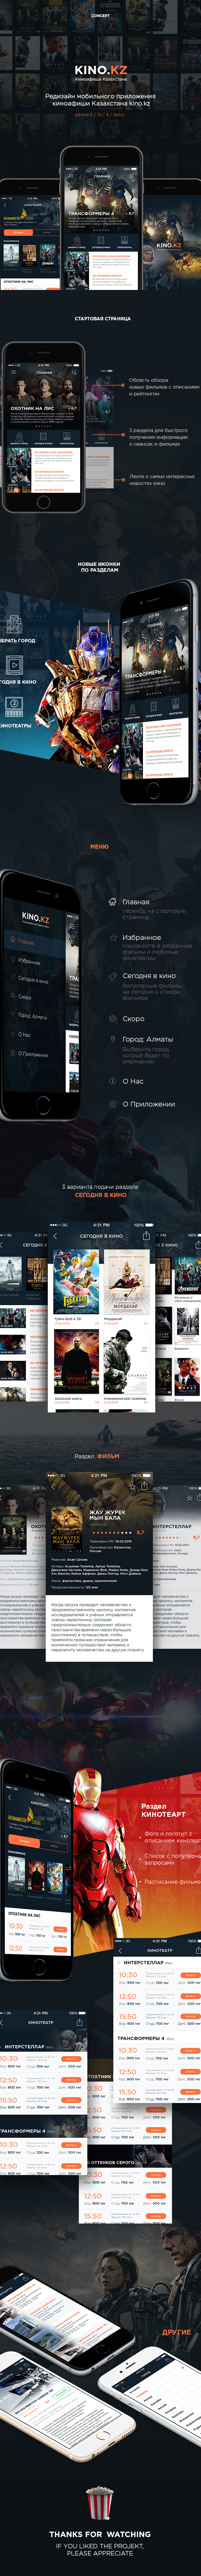 ios app iPhone6 mock up movie Cinema ticket design Web concept android interstellar Transformers Avengers designer